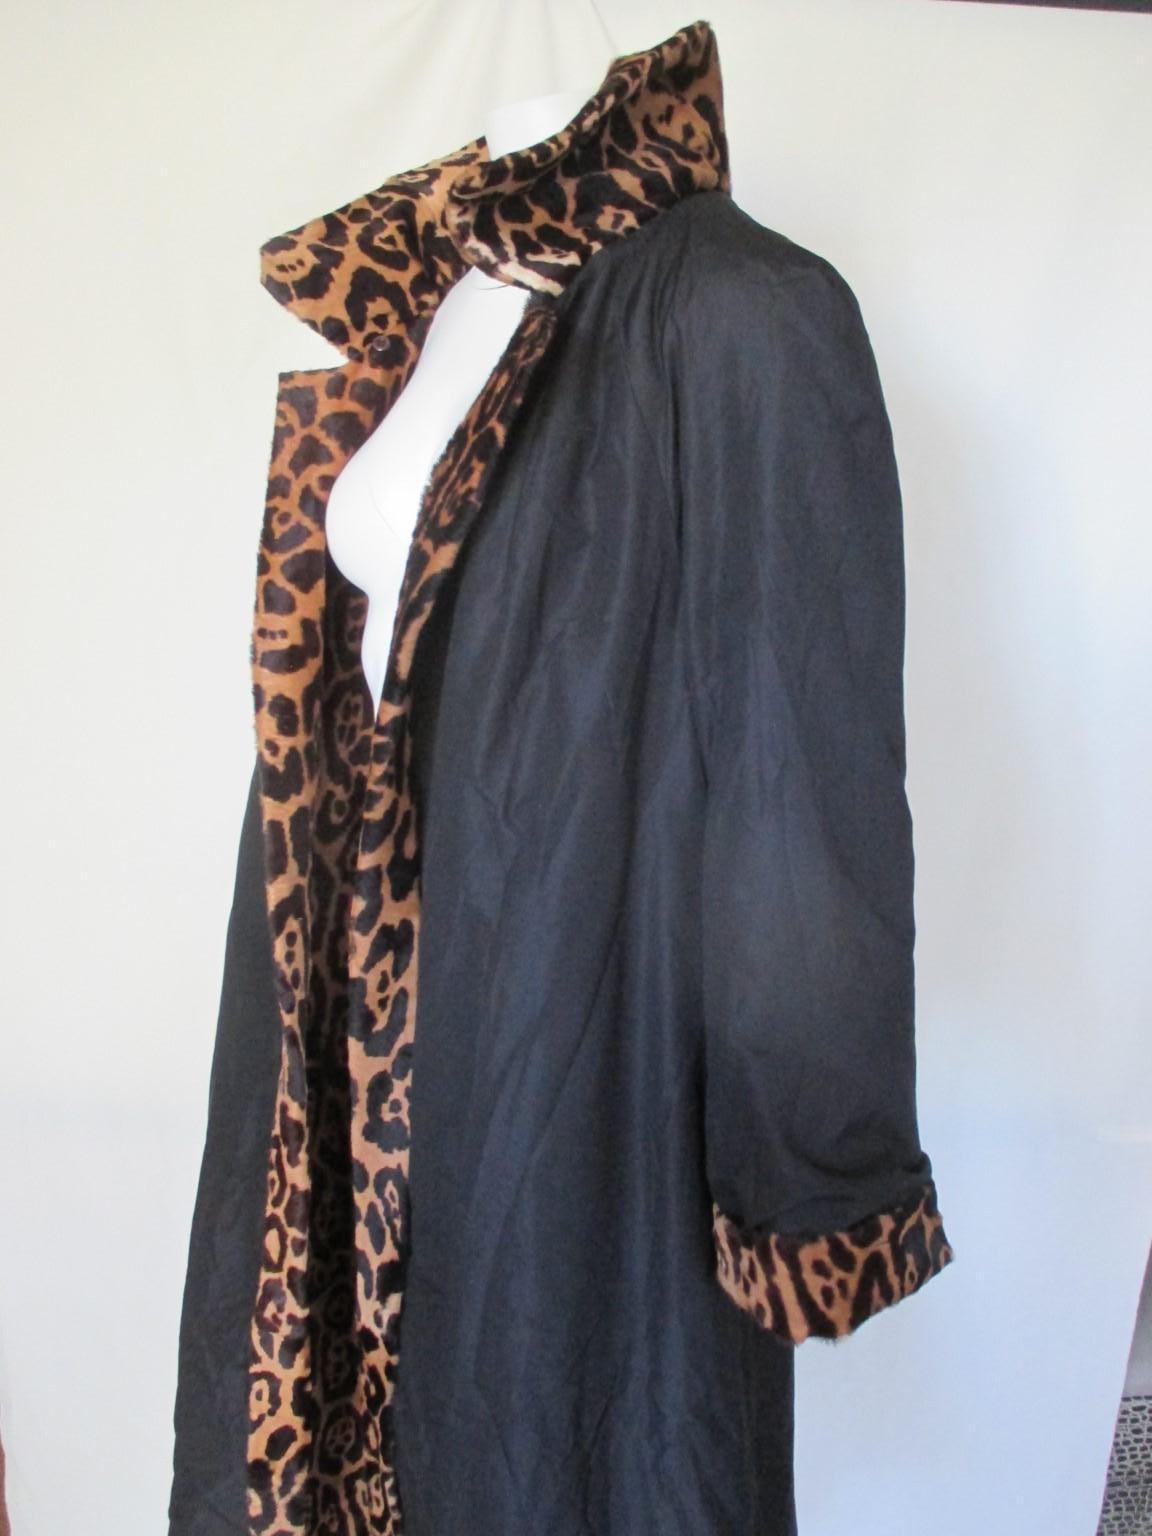 lanshifei leopard fur coat